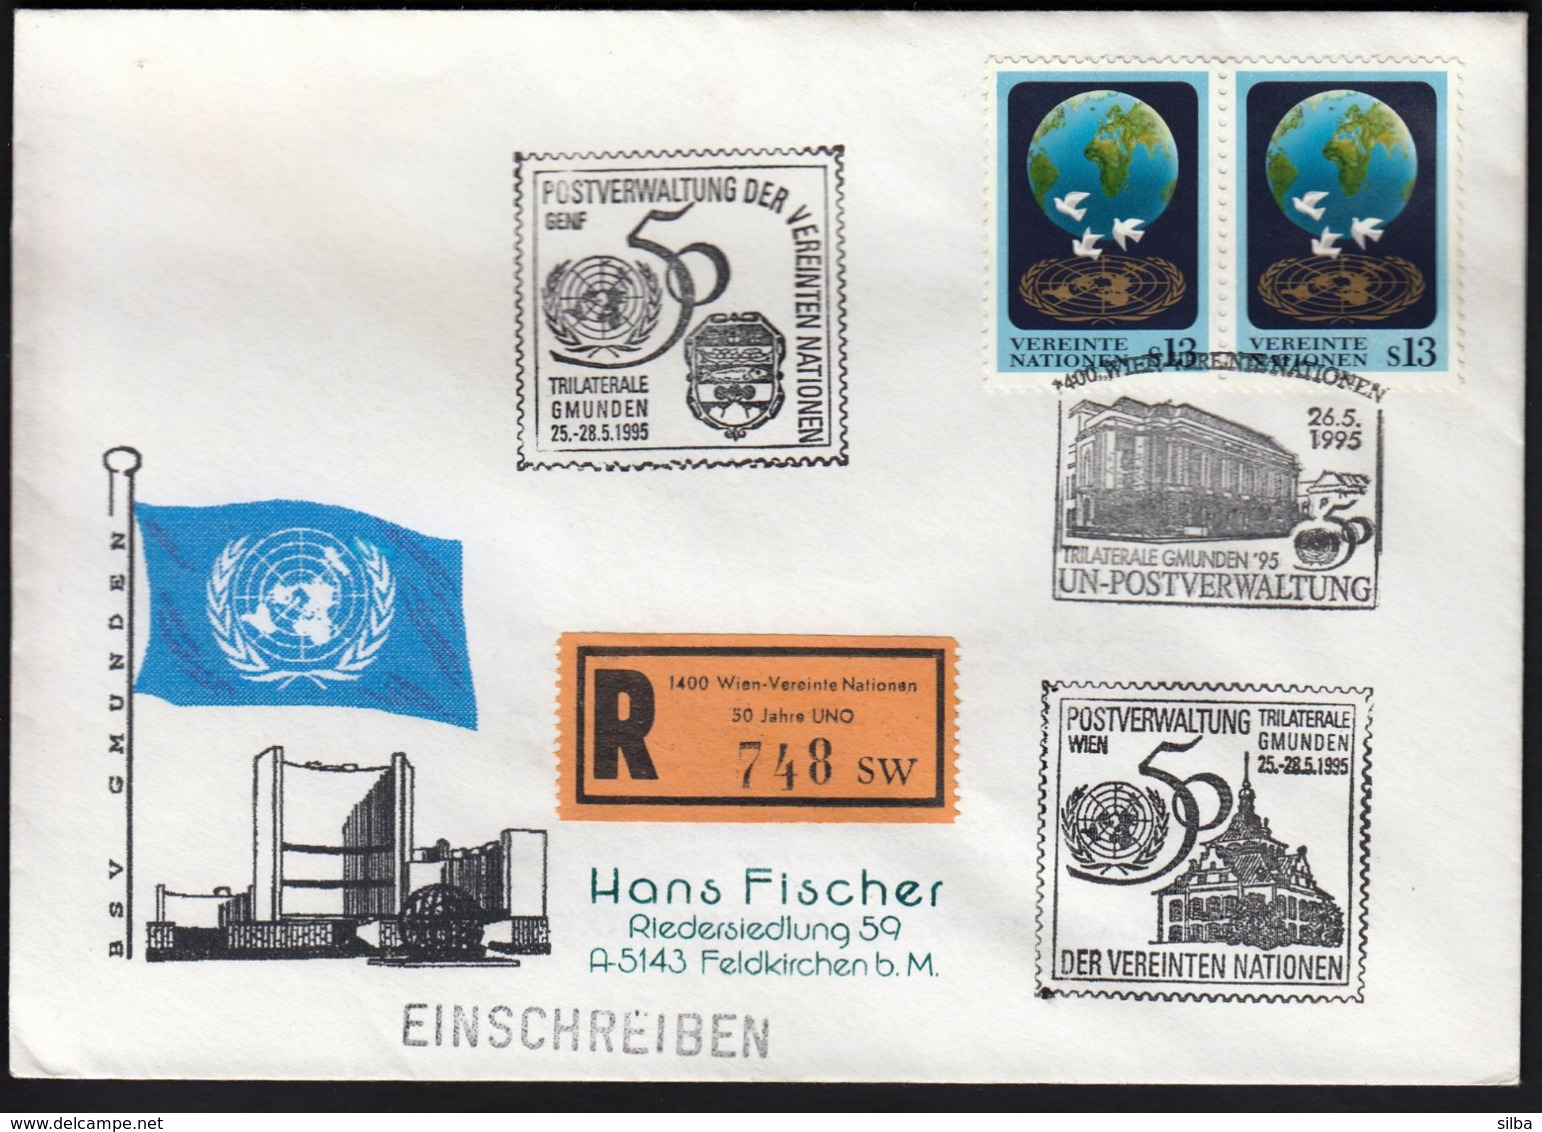 United Nations Wien Vienna 1995 / TRILATERALE, Gmunden / Philatelic Exhibition / Cachet Cancel / R Letter - Esposizioni Filateliche